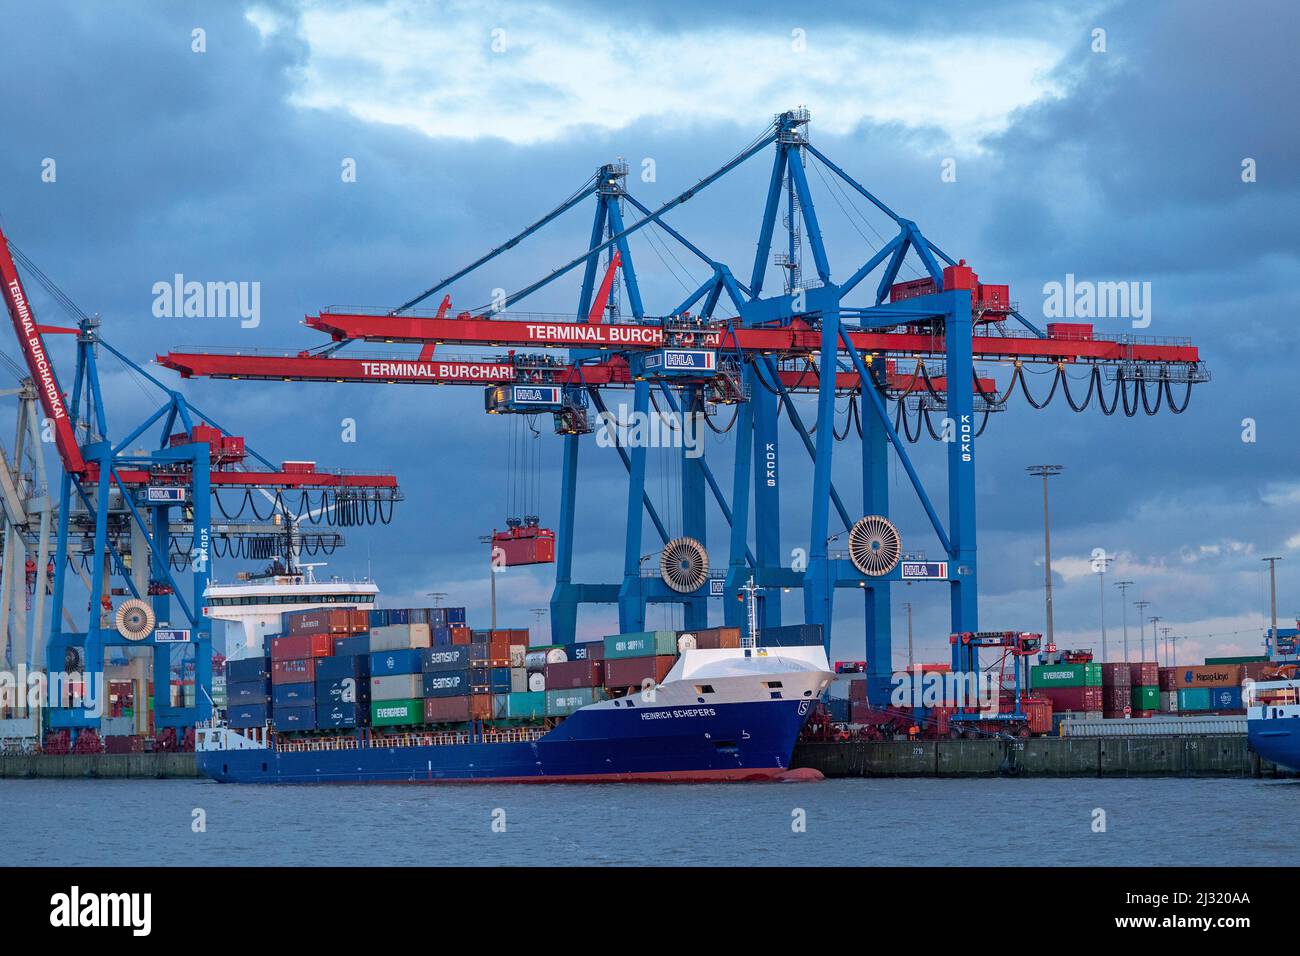 Container Terminal Burchardkai, harbour, Hamburg, Germany Stock Photo